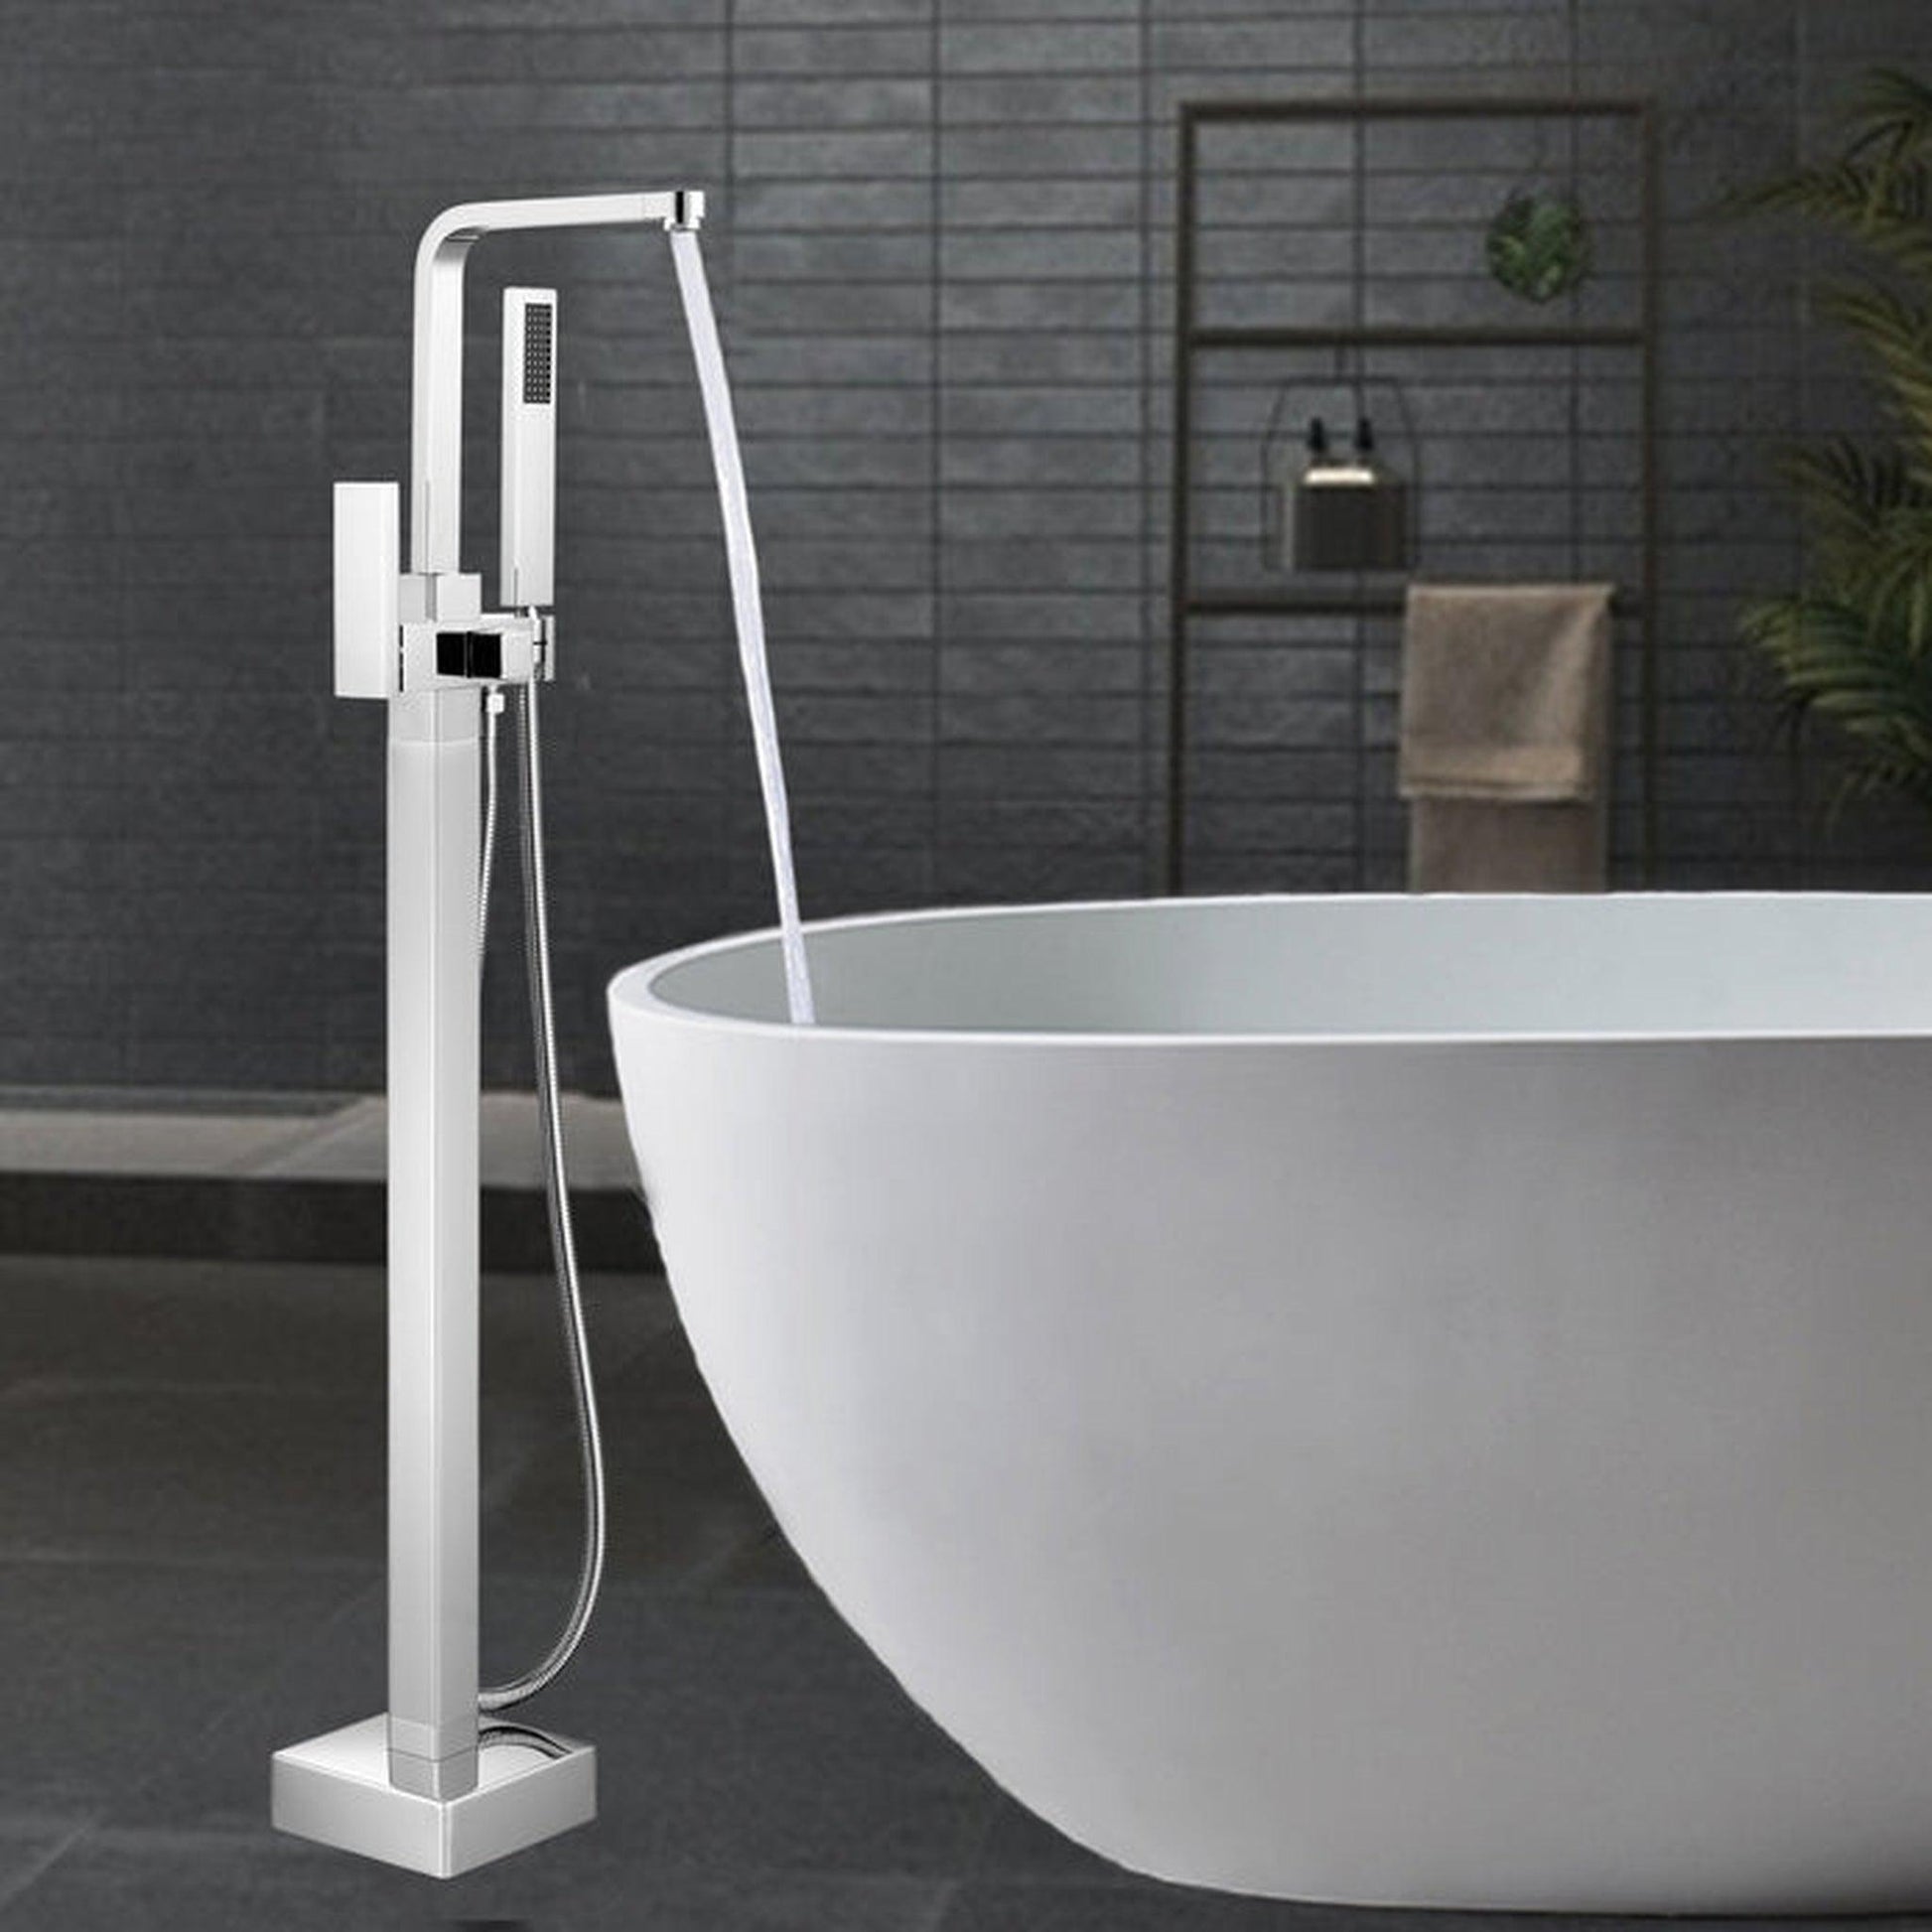 Vanity Art VA2016 42" Polished Chrome Freestanding Waterfall Bathtub Faucet With Handheld Shower